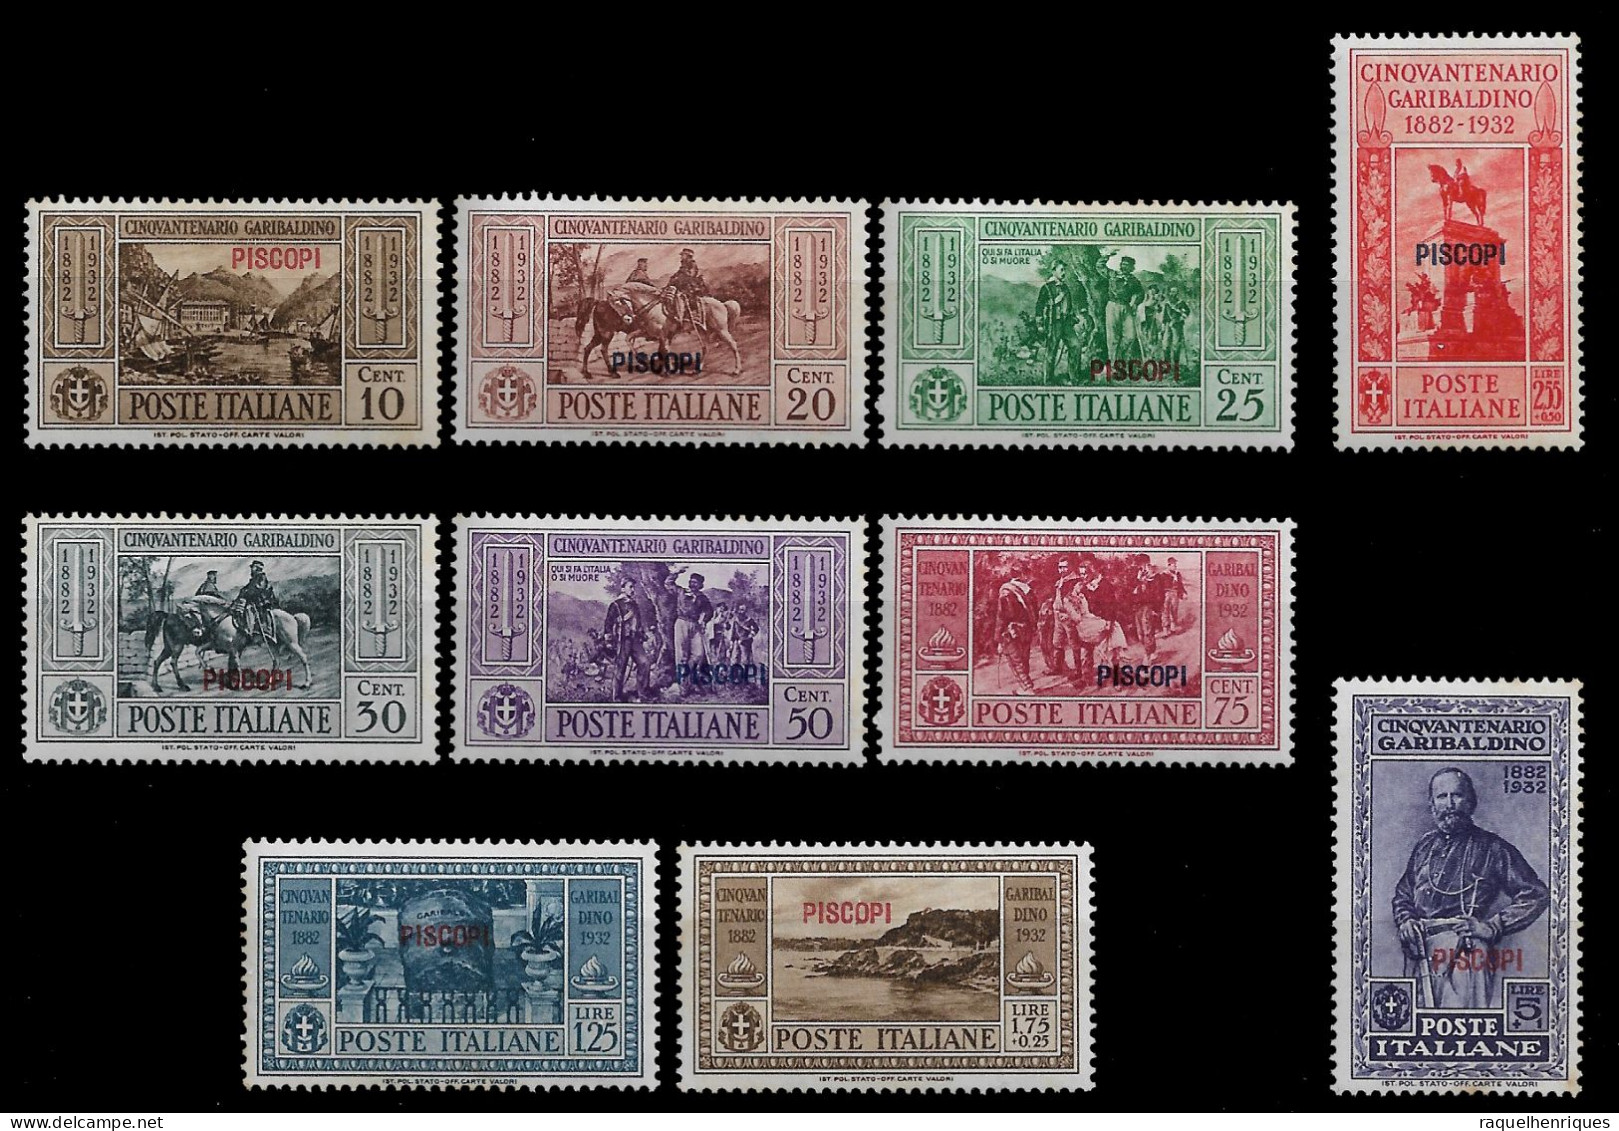 Postage Stamps Of Italian Colonies - PISCOPI 1932 Giuseppe Garibaldi SET MNH (BA5#399) - Aegean (Piscopi)